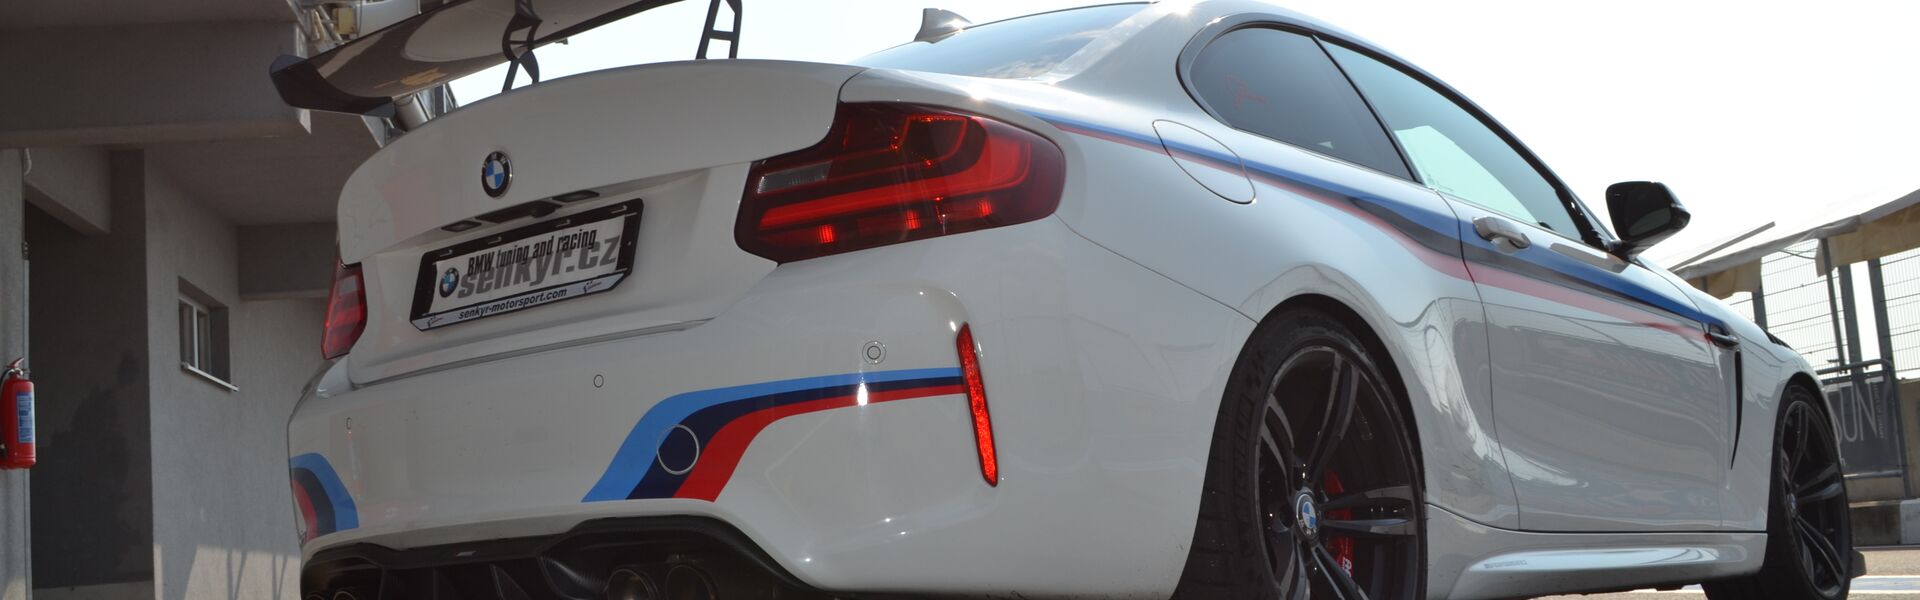 Bodykit/ Aerodynamické prvky pro automobil BMW X6M E71